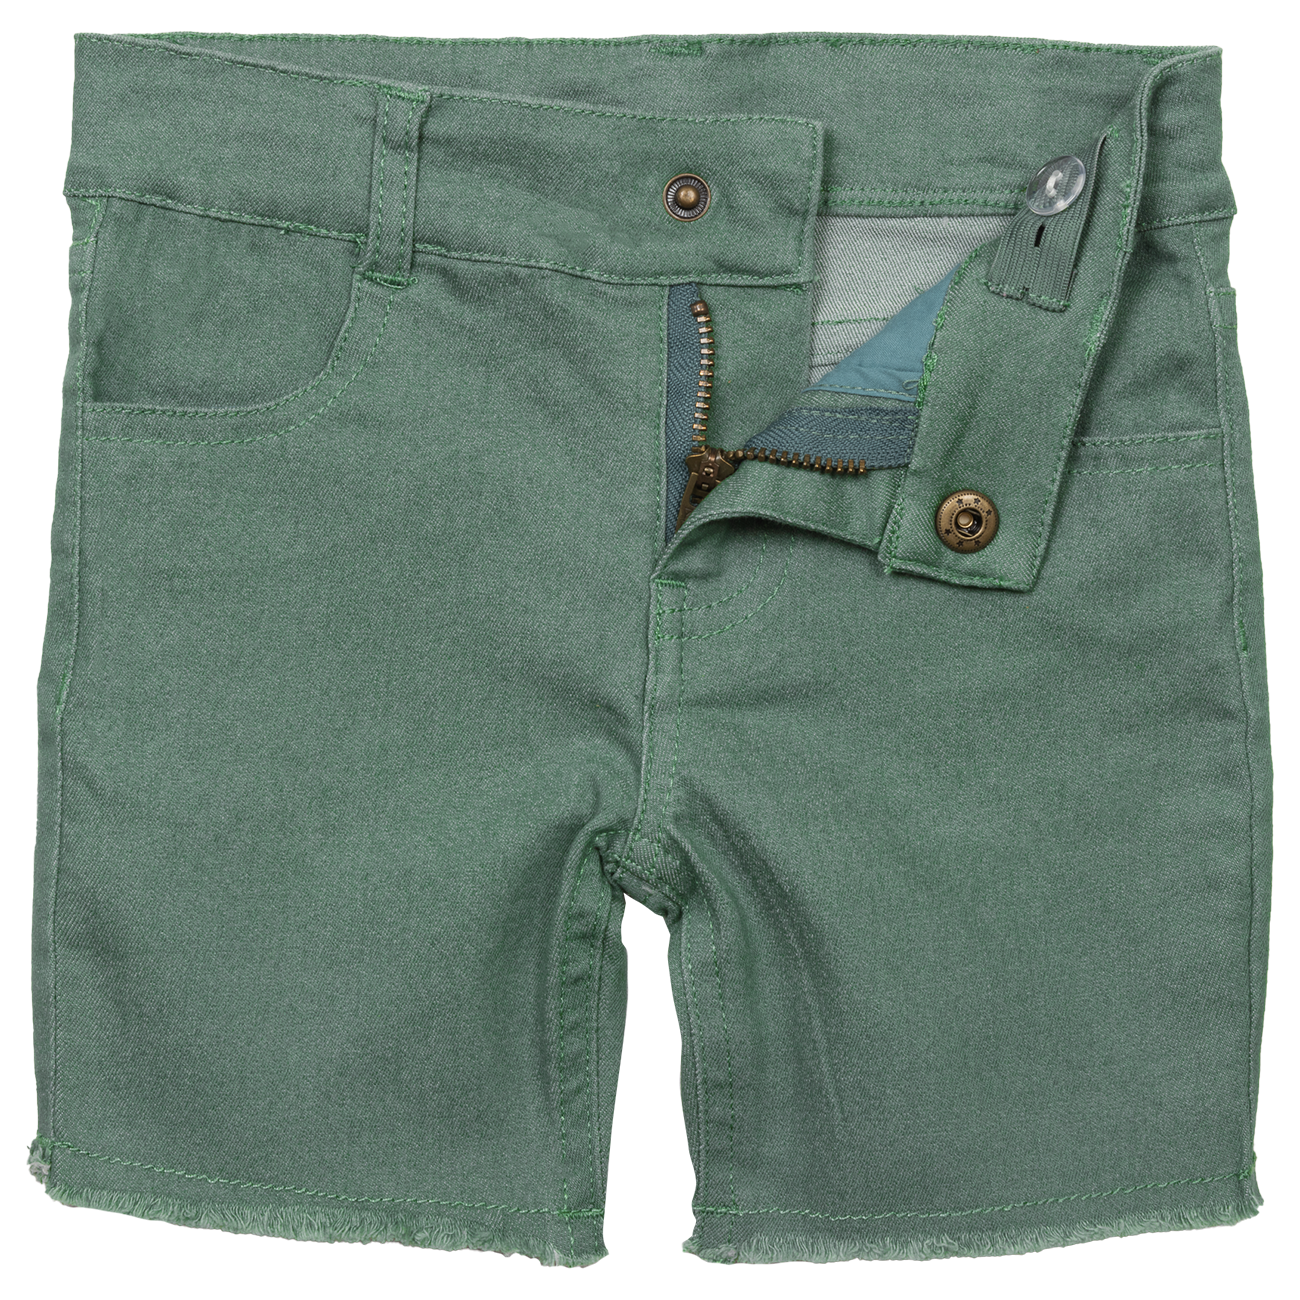 Waco Shorts (Green): 6 years